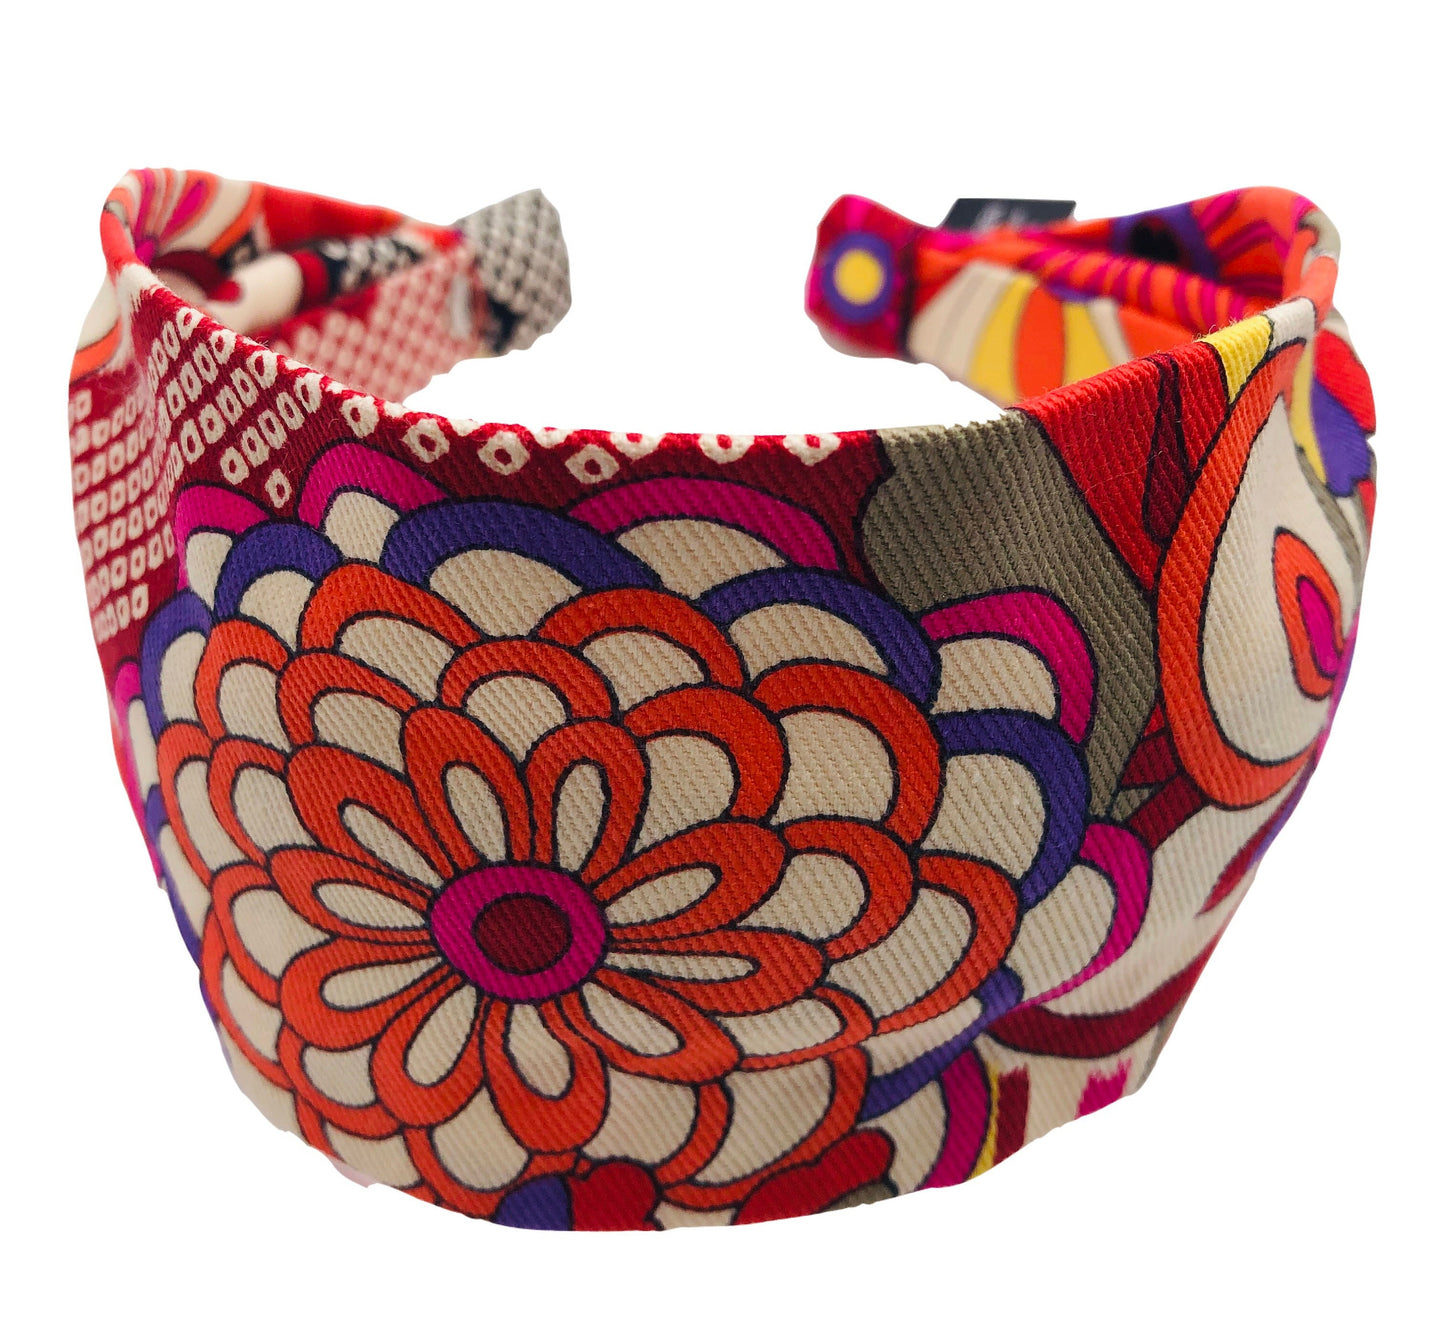 Karin's Garden 2 1/2"- 3" Retro Floral Cotton Blend Scarf Headband.  Handmade in the USA. Comfortable!